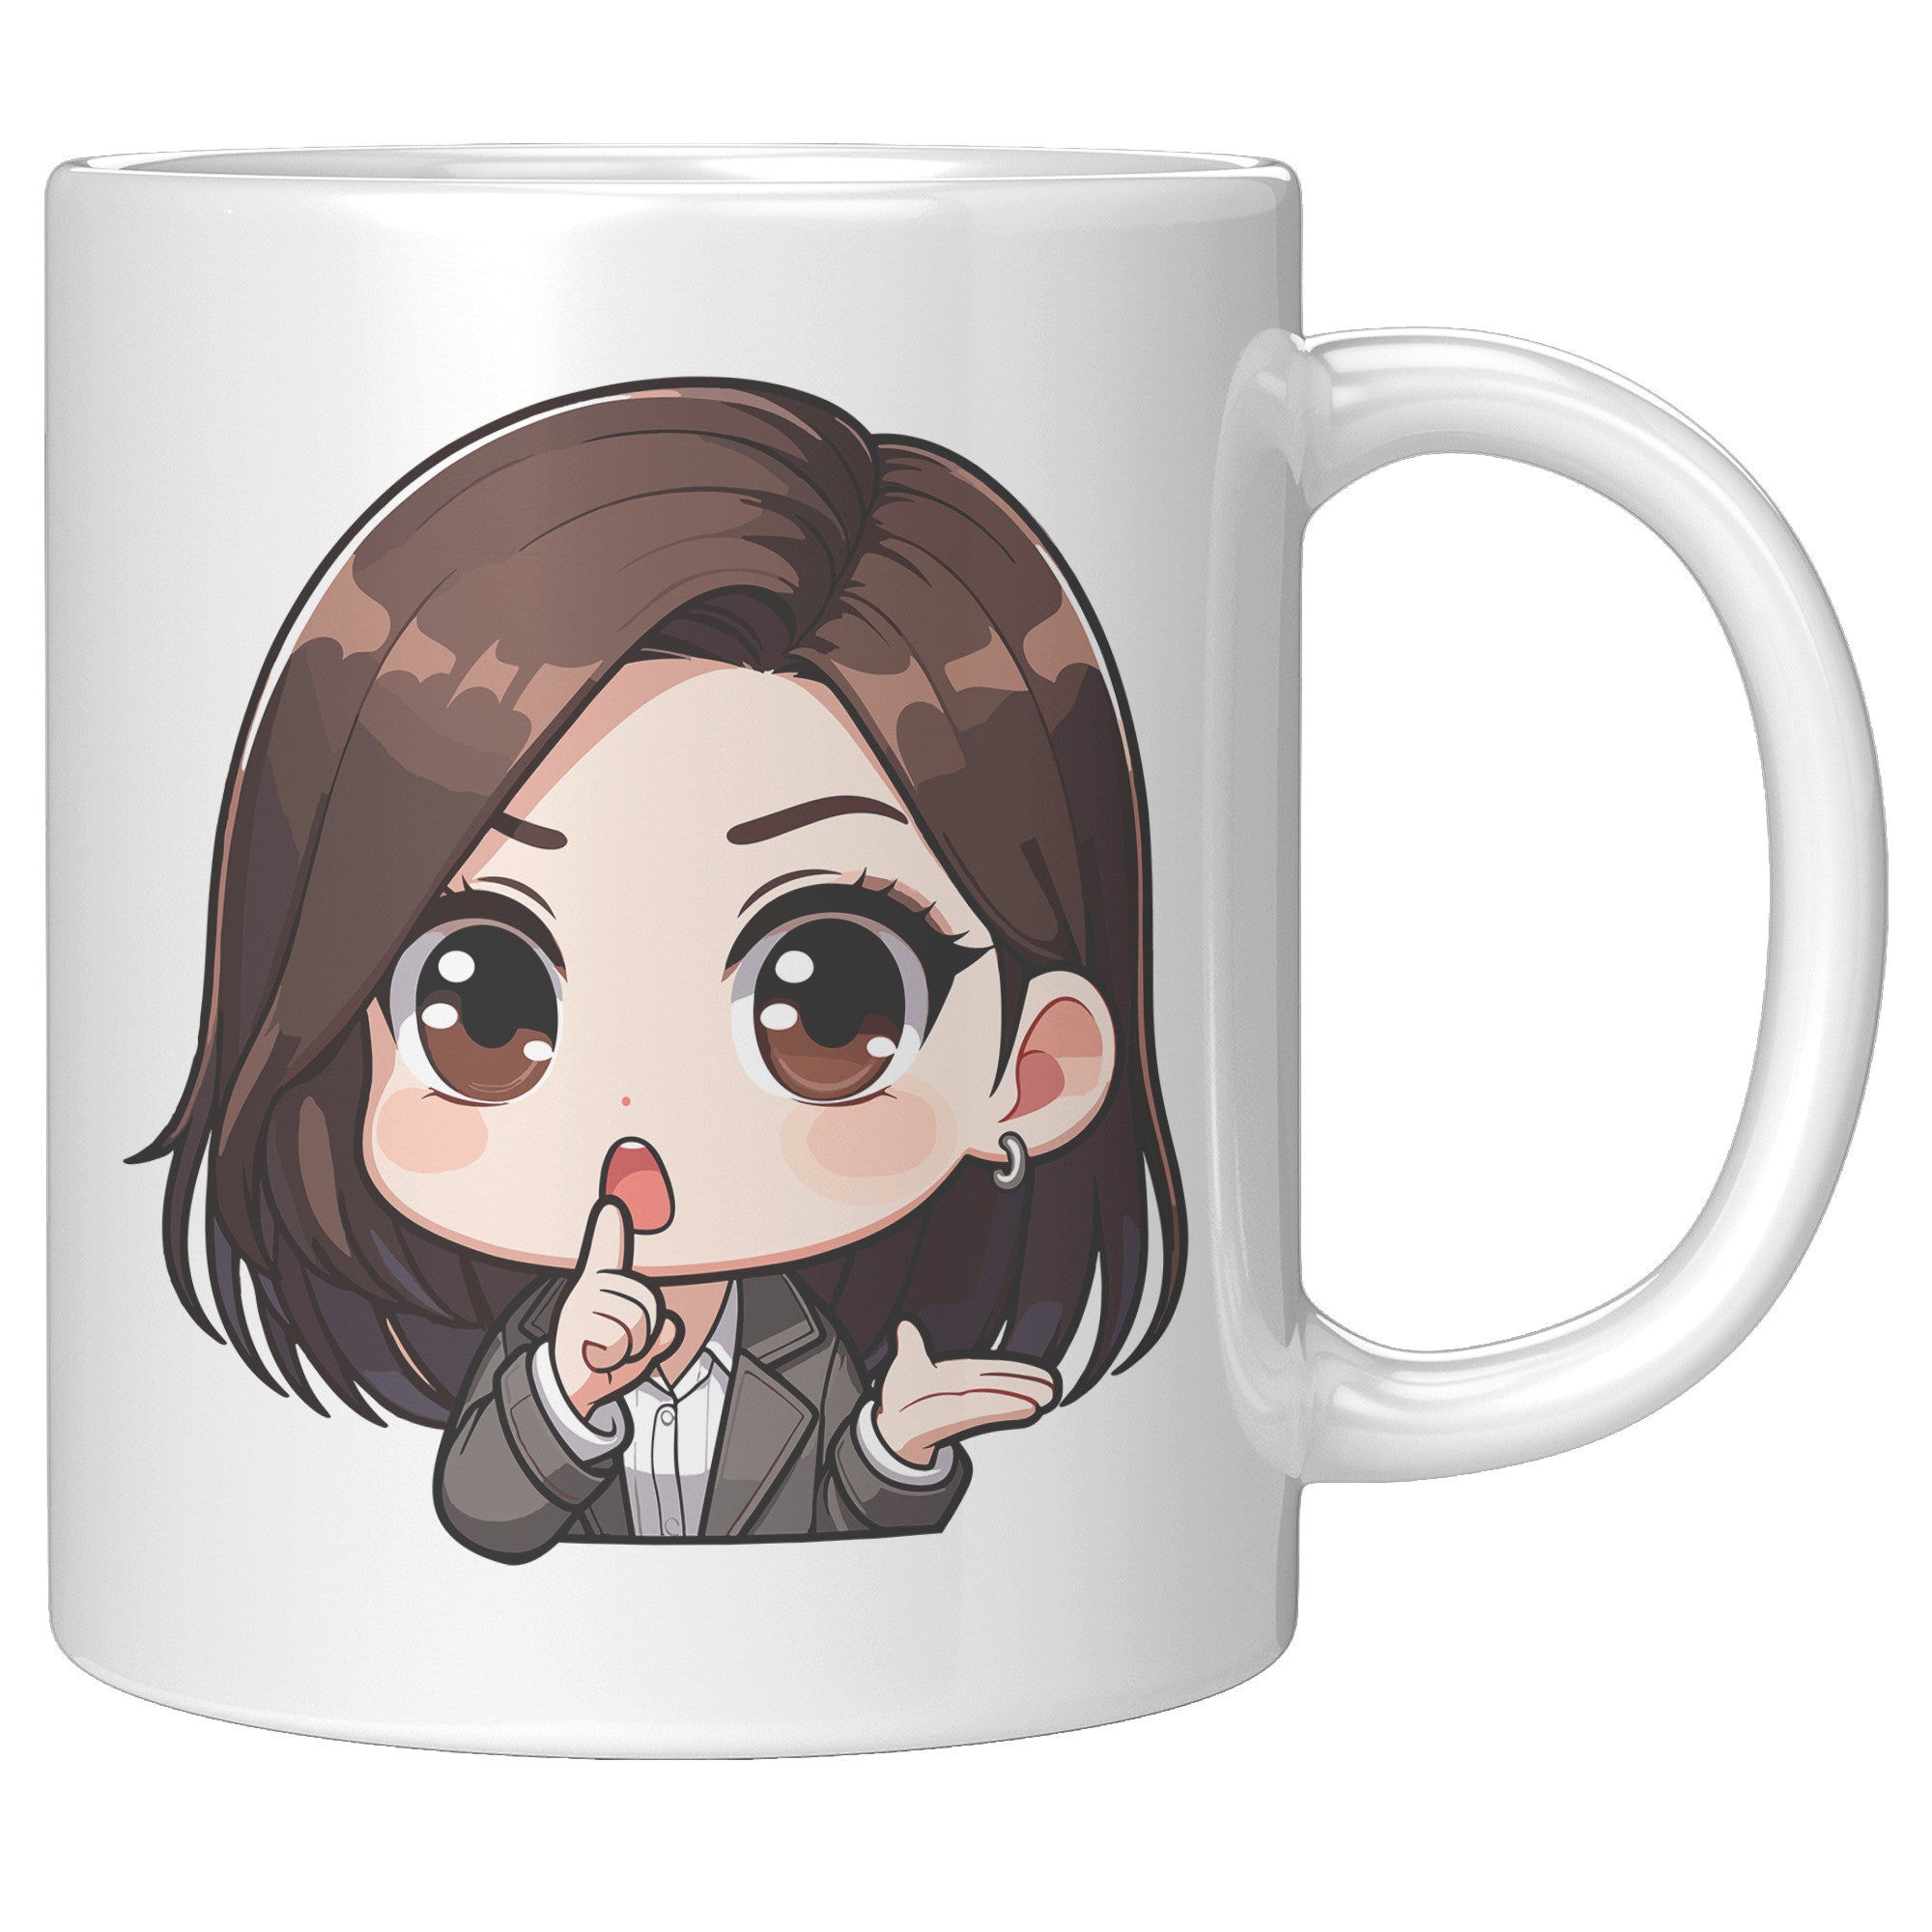 "Marites Gossip Queen Coffee Mug - Cute Cartoon 'Ano Ang Latest?' Cup - Perfect Chismosa Gift - Filipino Slang Tea Mug" - K